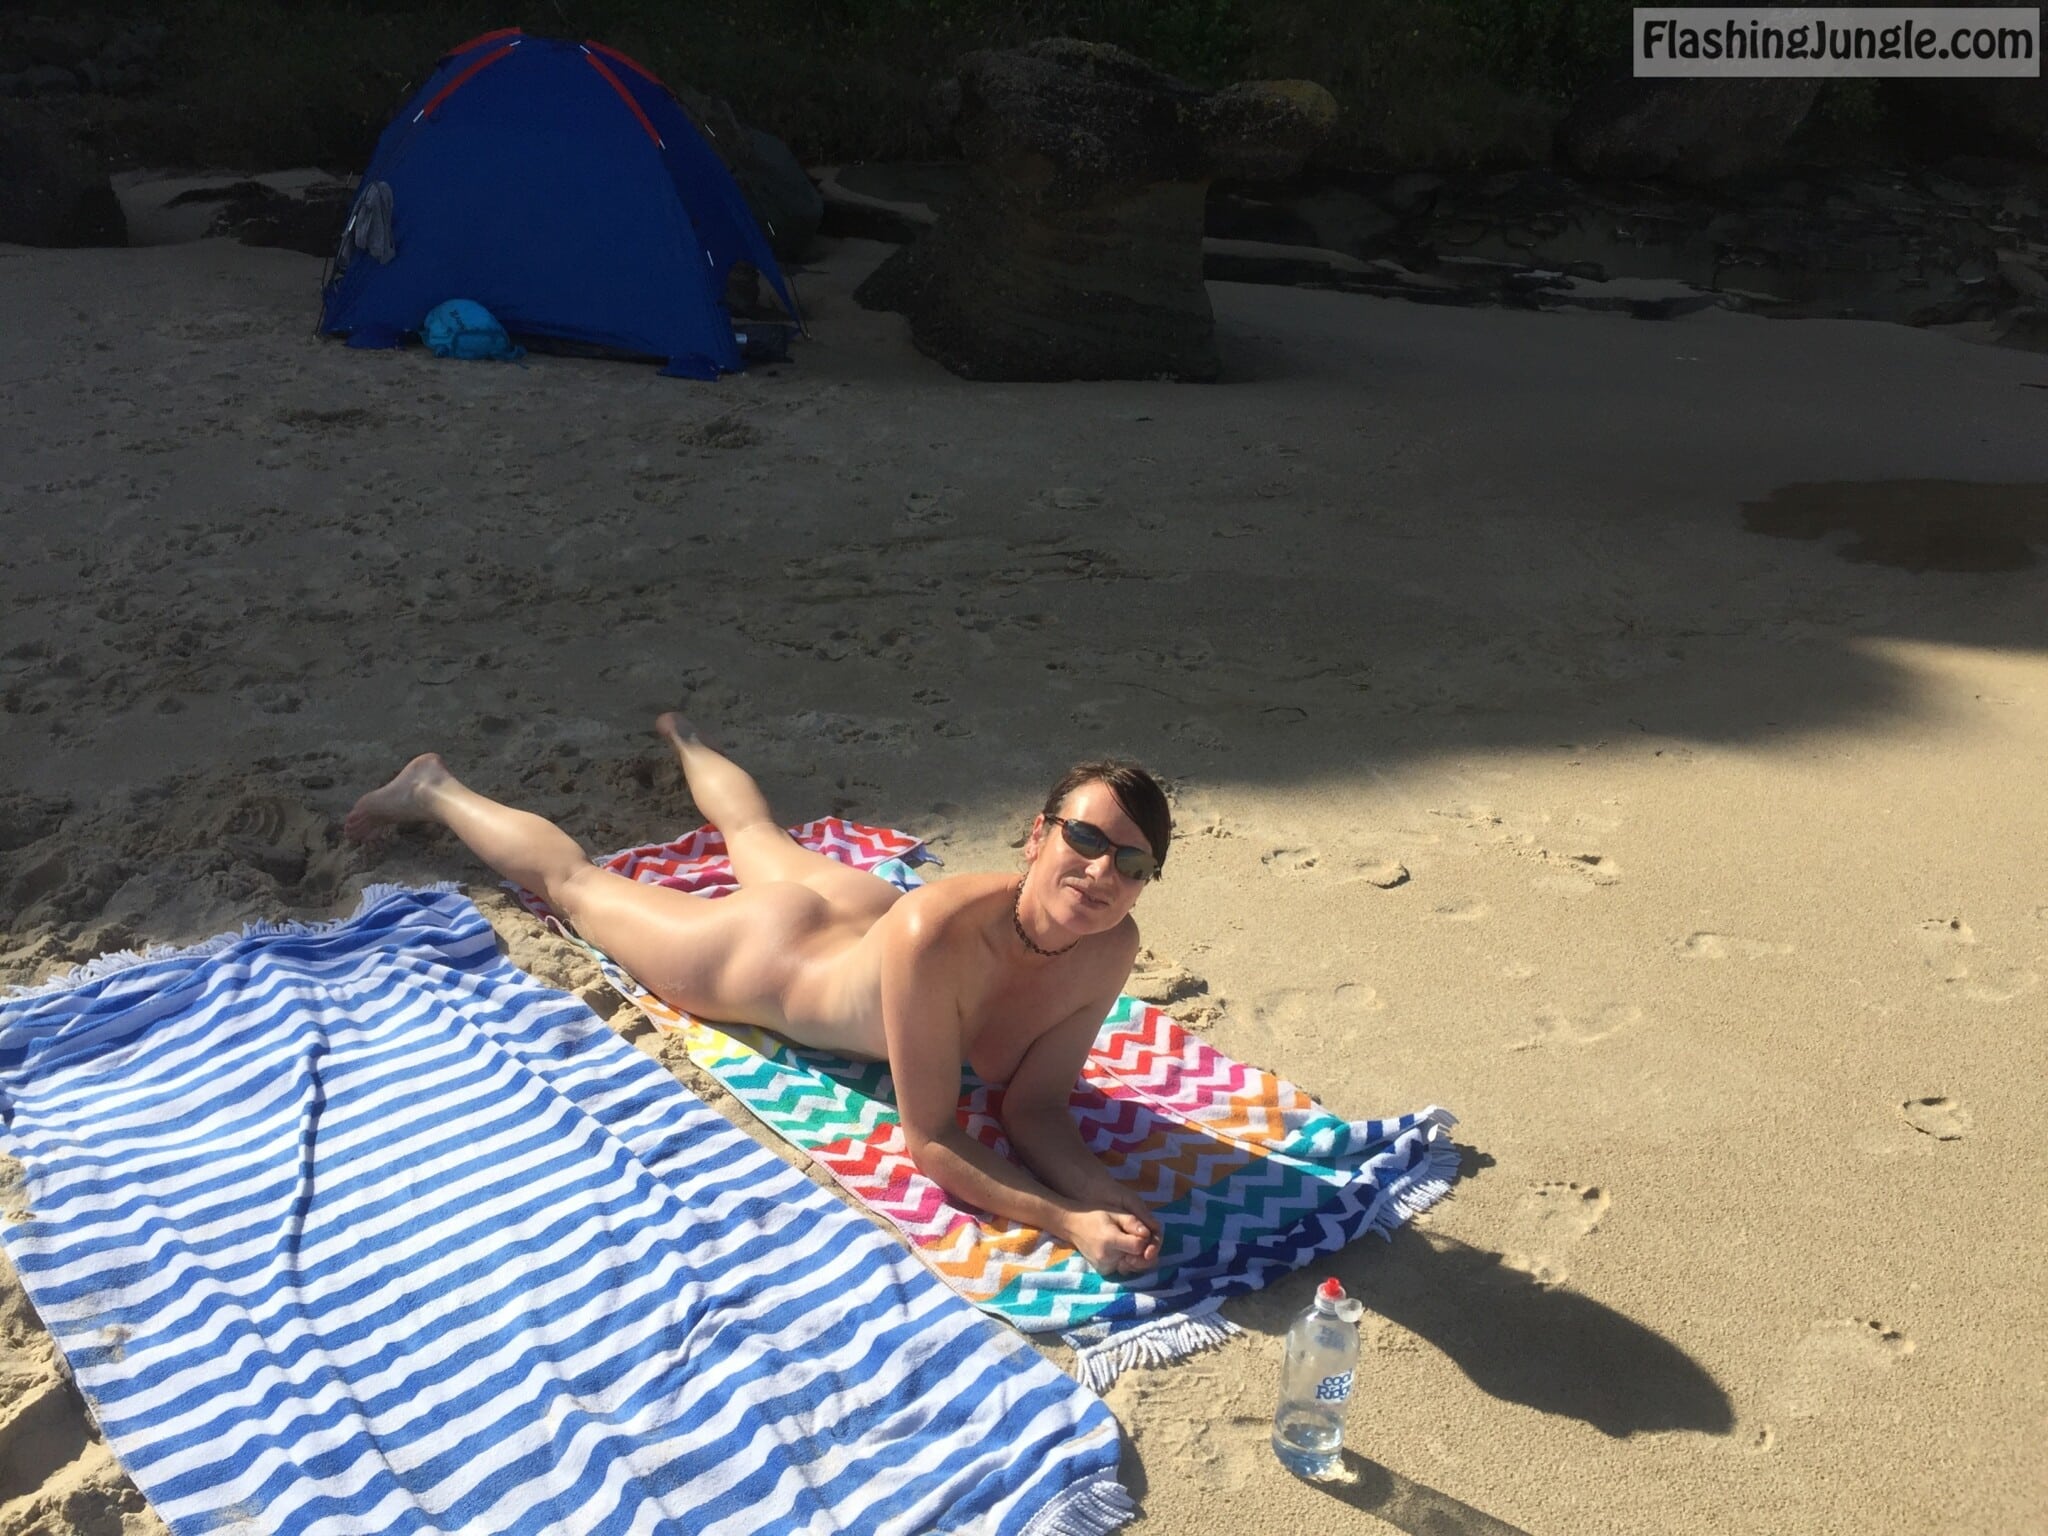 Real Amateurs Public Nudity Pics Nude Beach Pics MILF Flashing Pics Hotwife Pics